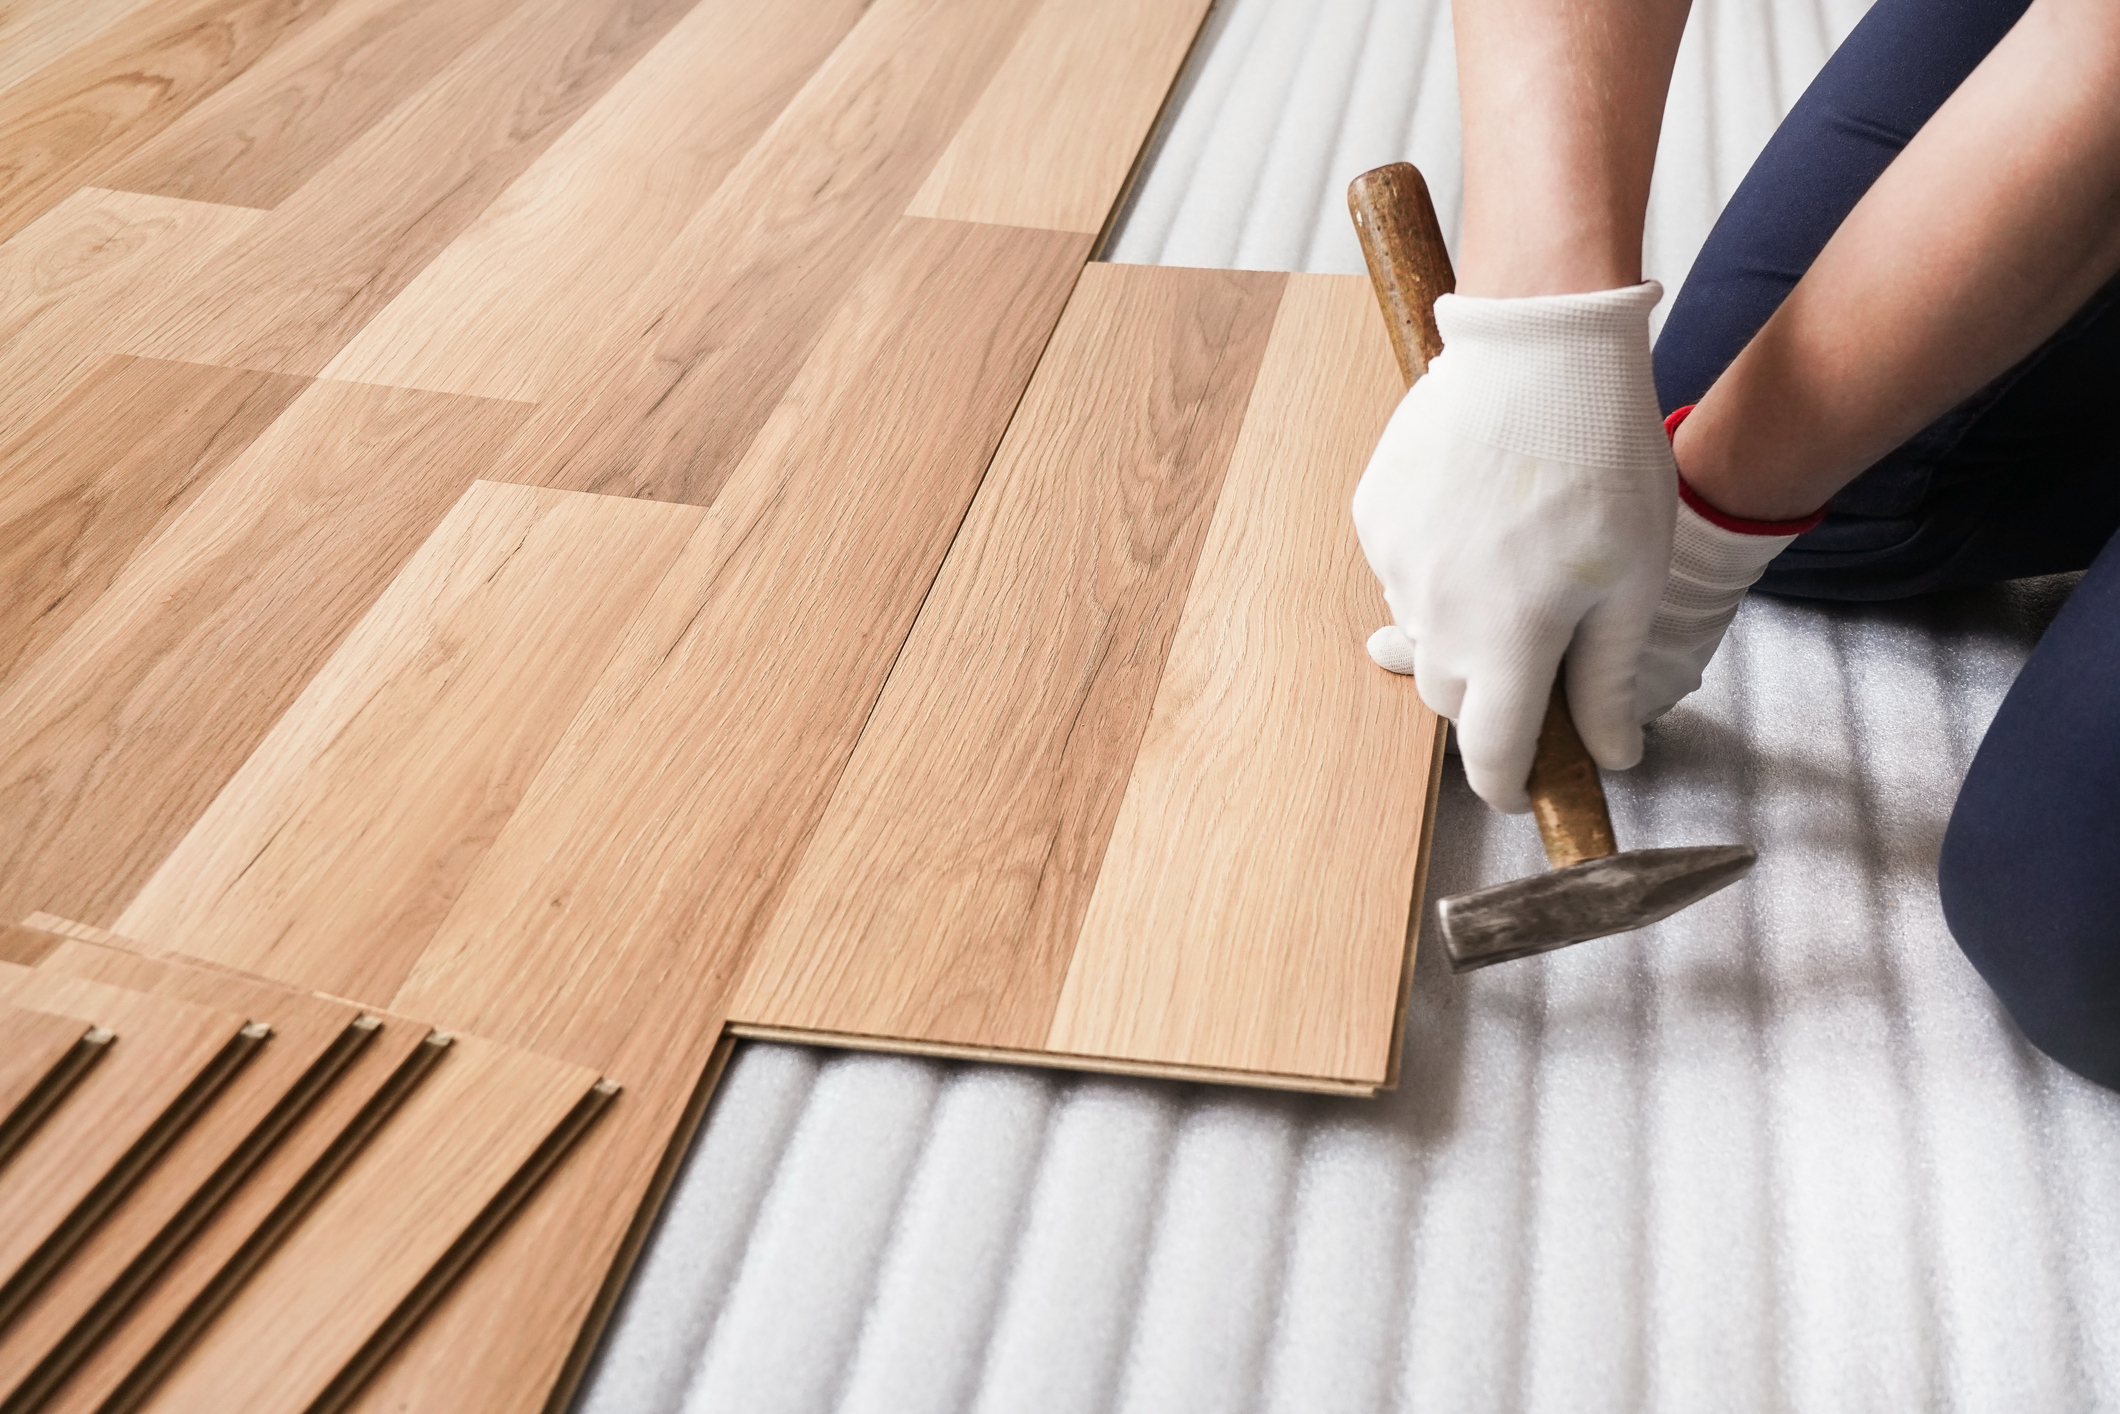 Laminate Flooring Labor Cost - Vinyl Plank Flooring Prices And ...
